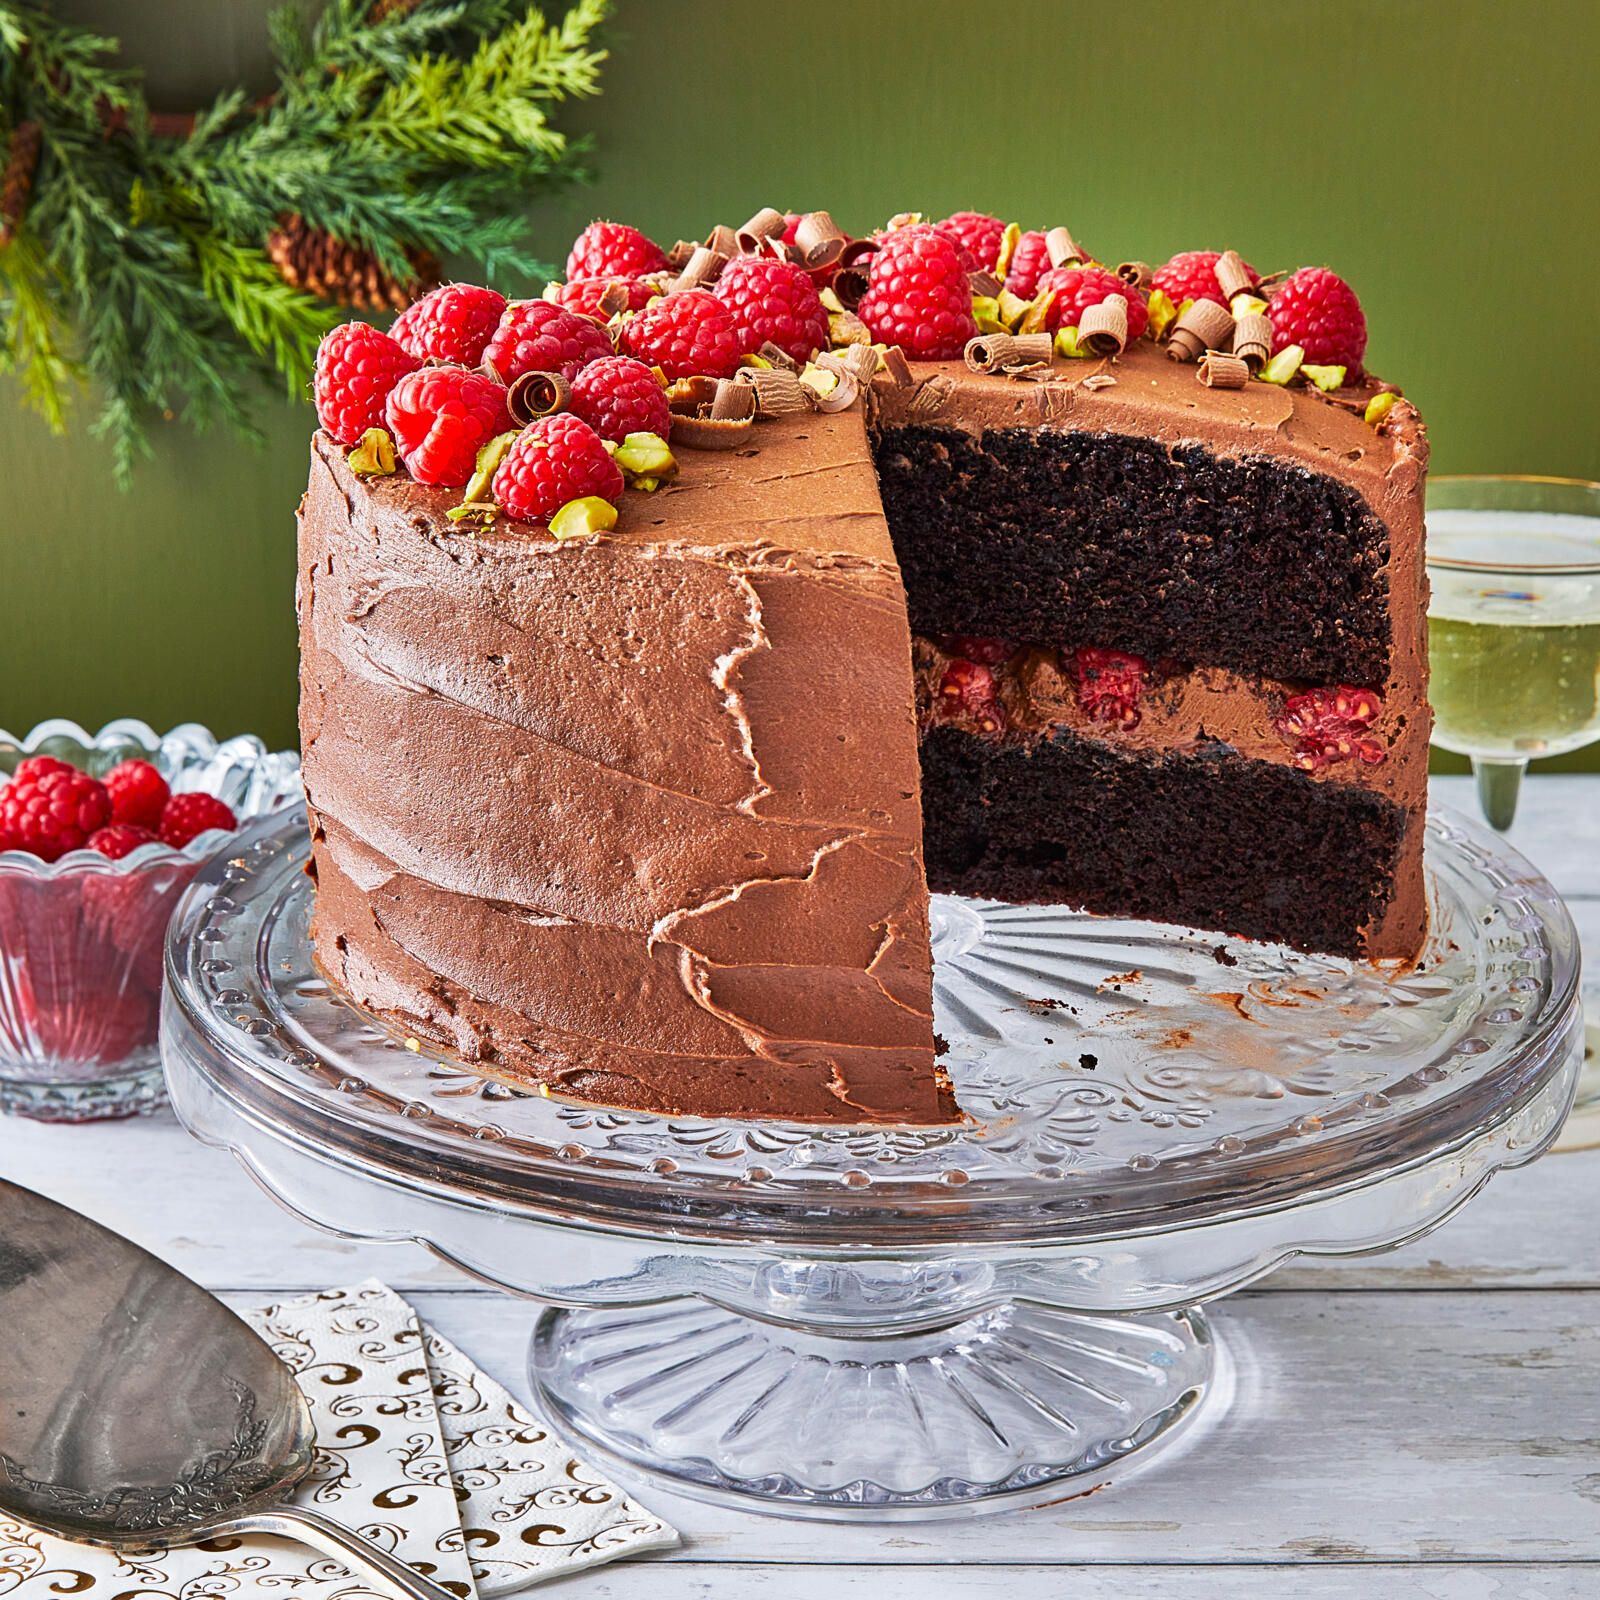 Chocolate Raspberry Mousse Cake - Delicious, Homemade Recipe